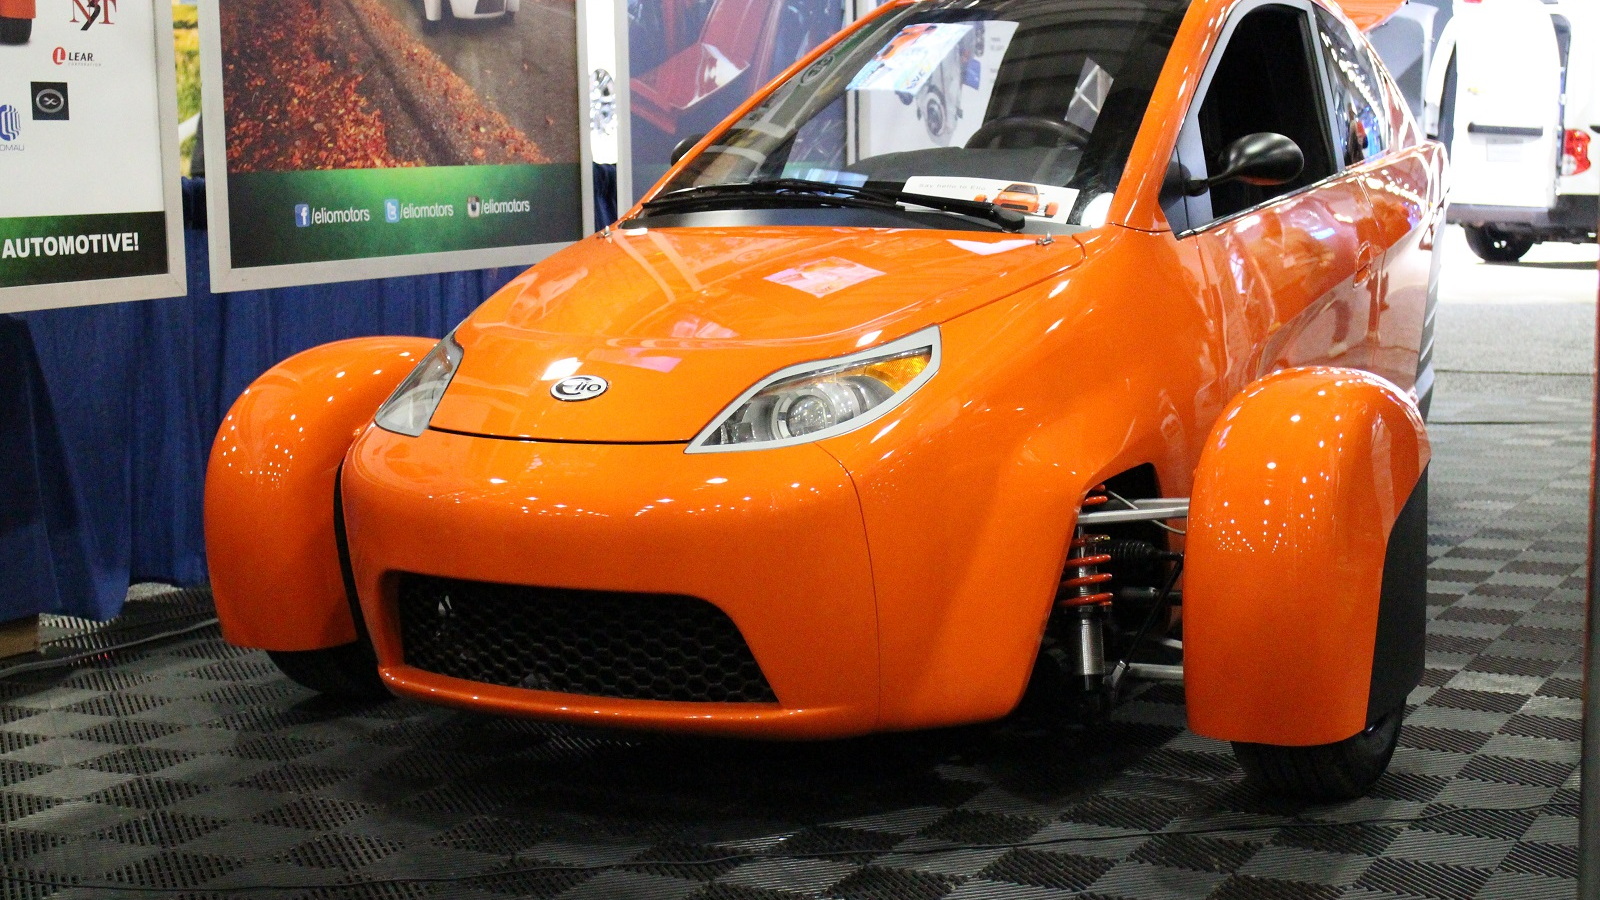 Elio Motors prototype at New York Auto Show press conference, Apr 2015